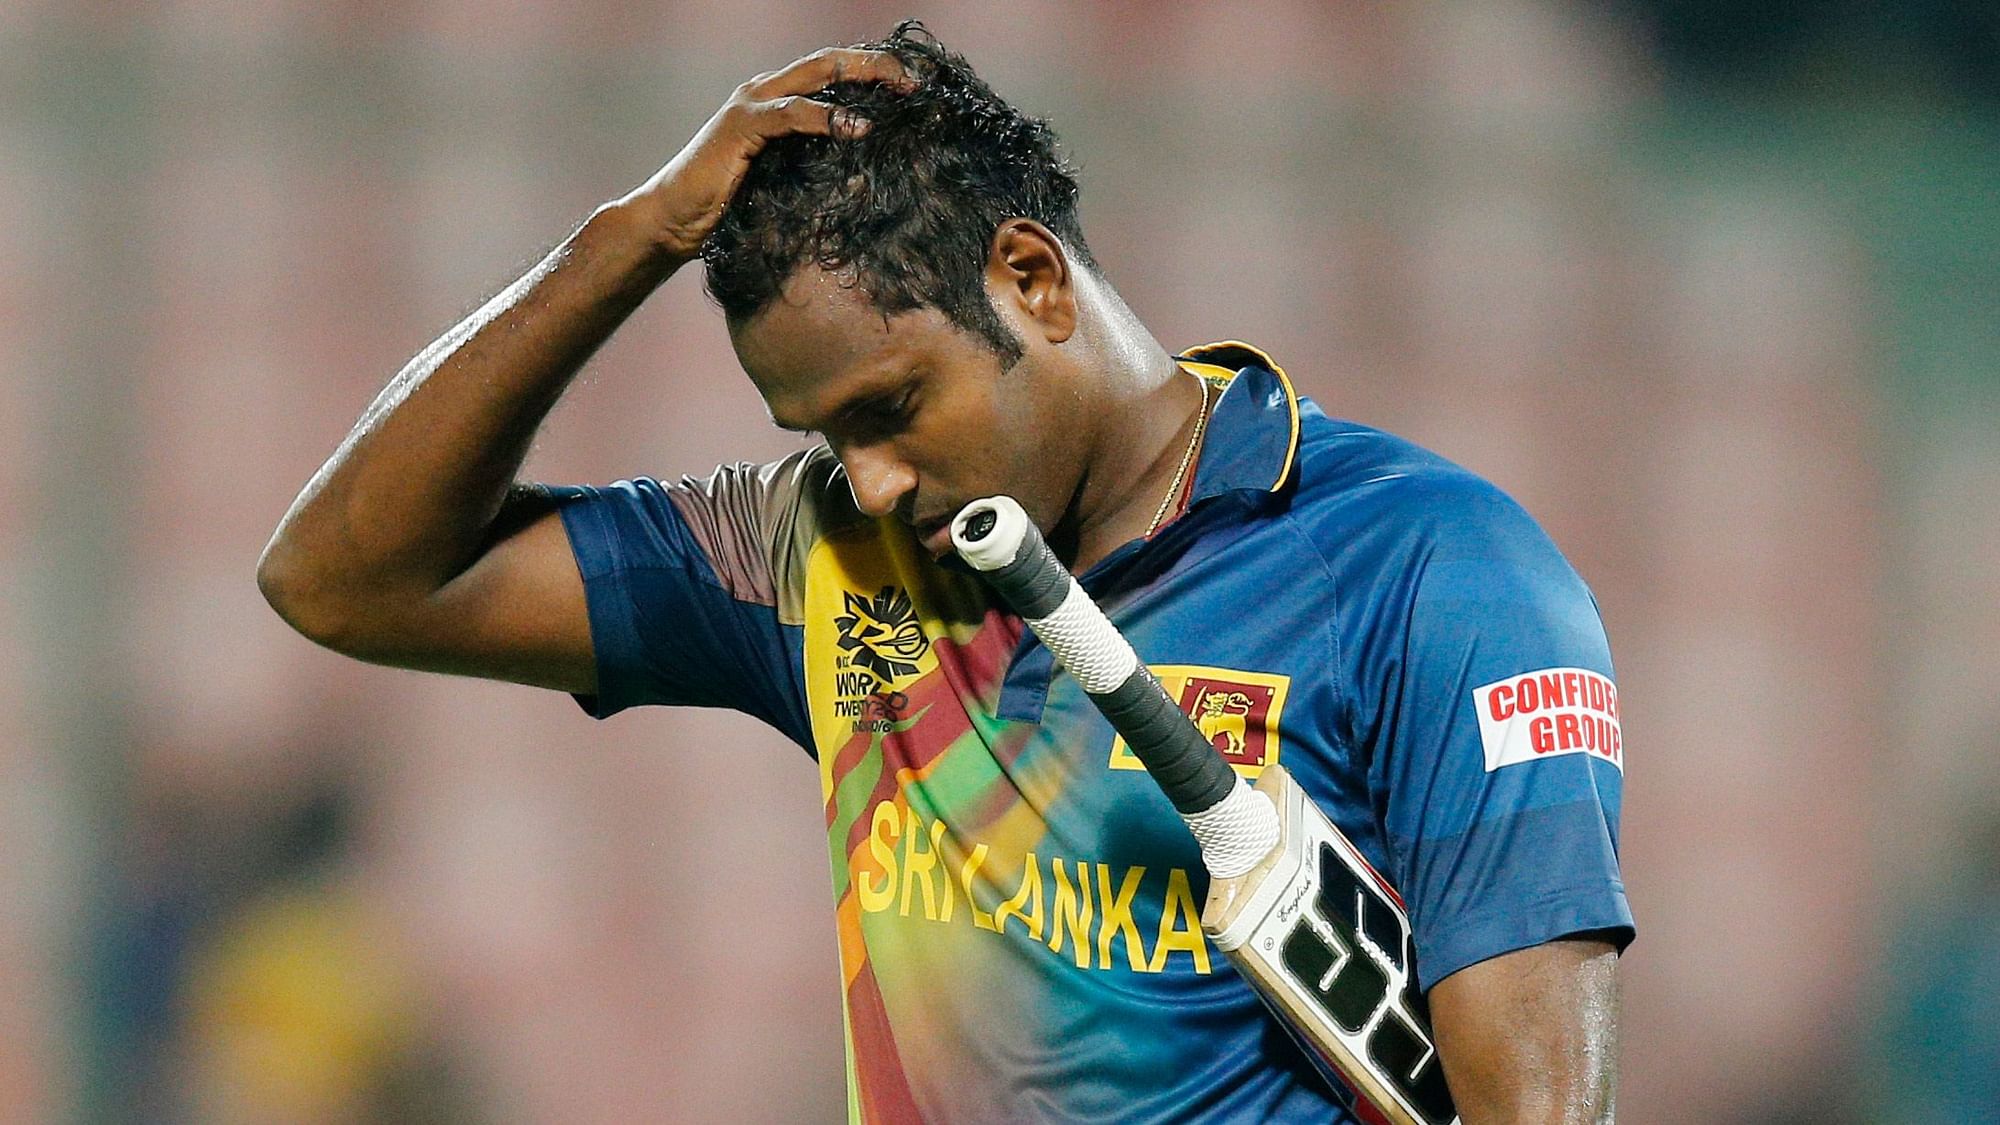 File image of Sri Lankan cricketer Angelo Mathews.